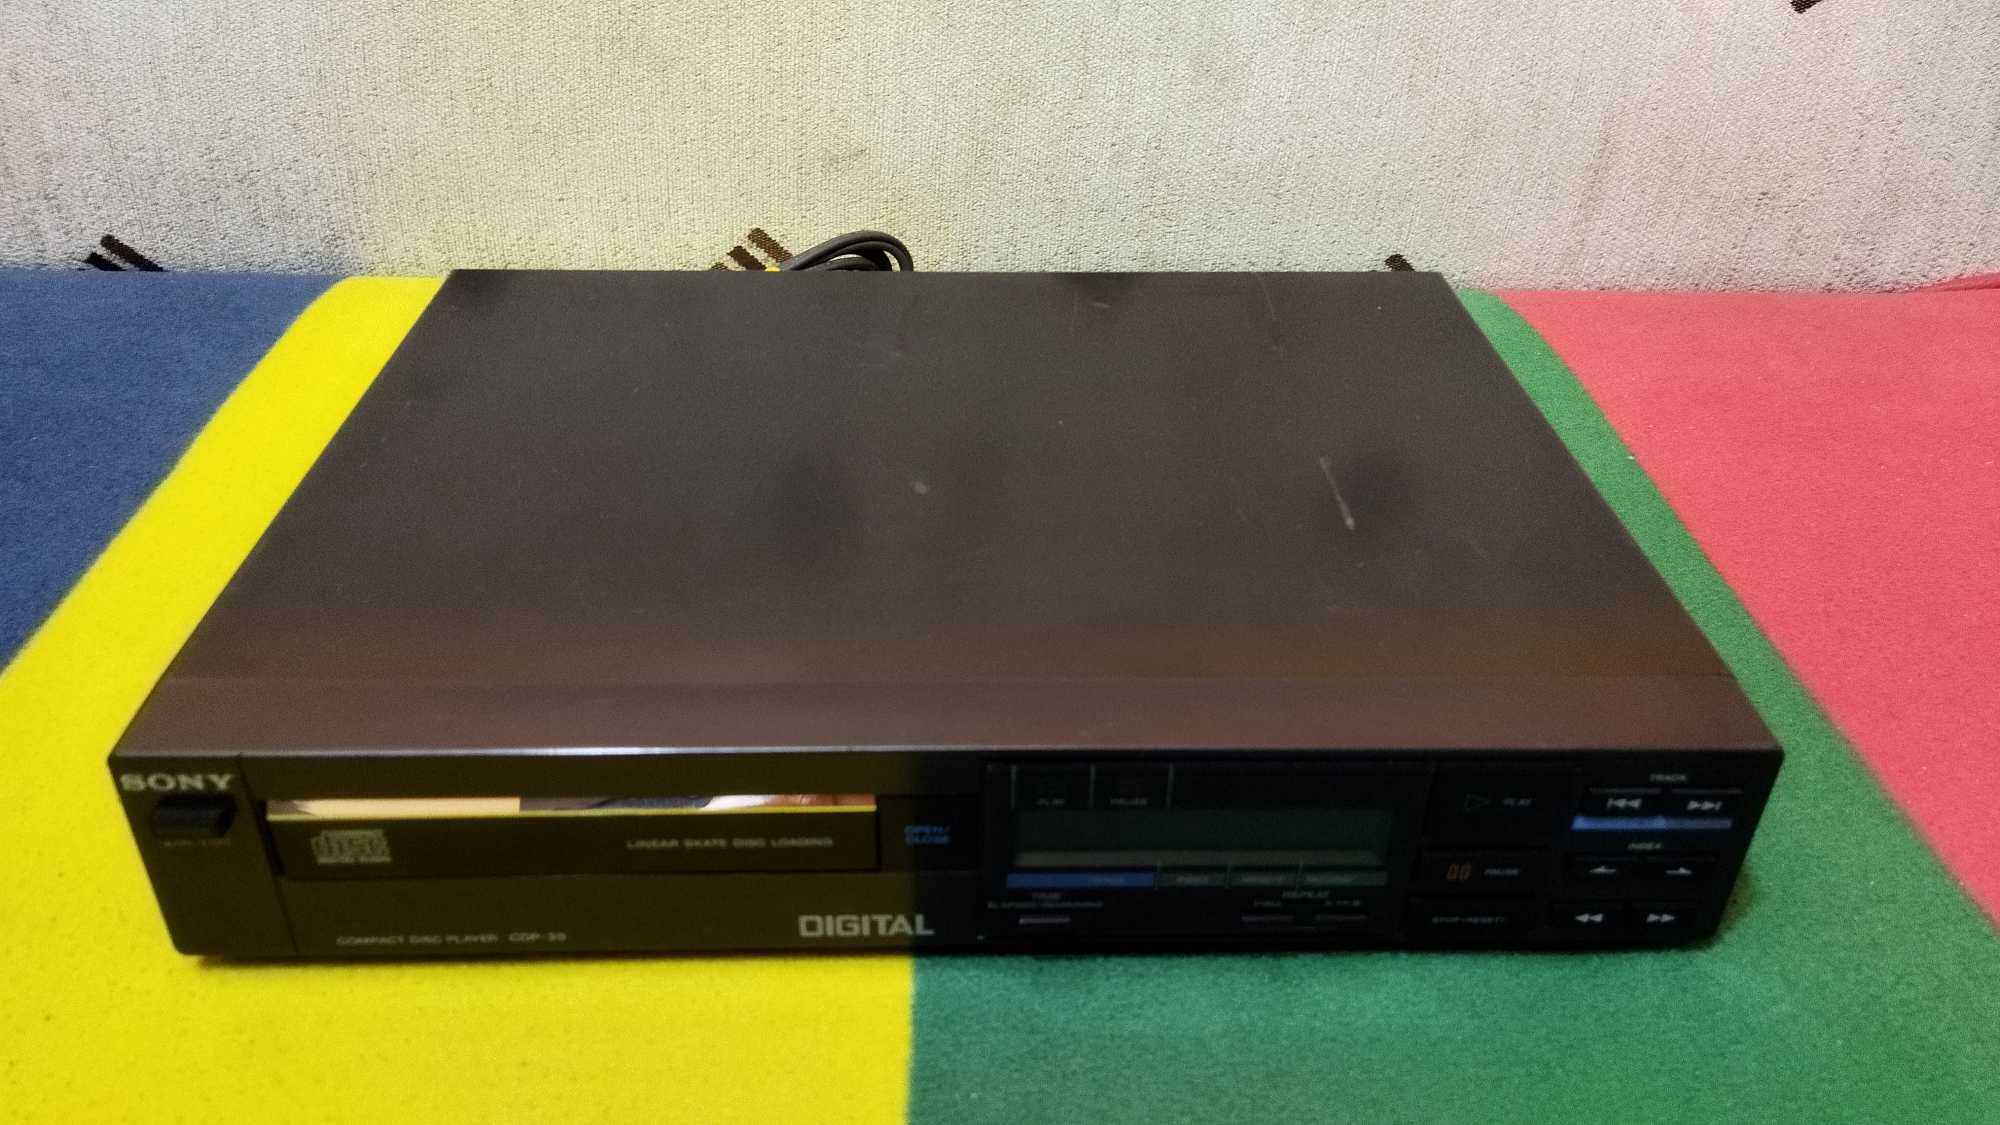 CD player vintage Sony CDP-30 din anii 80